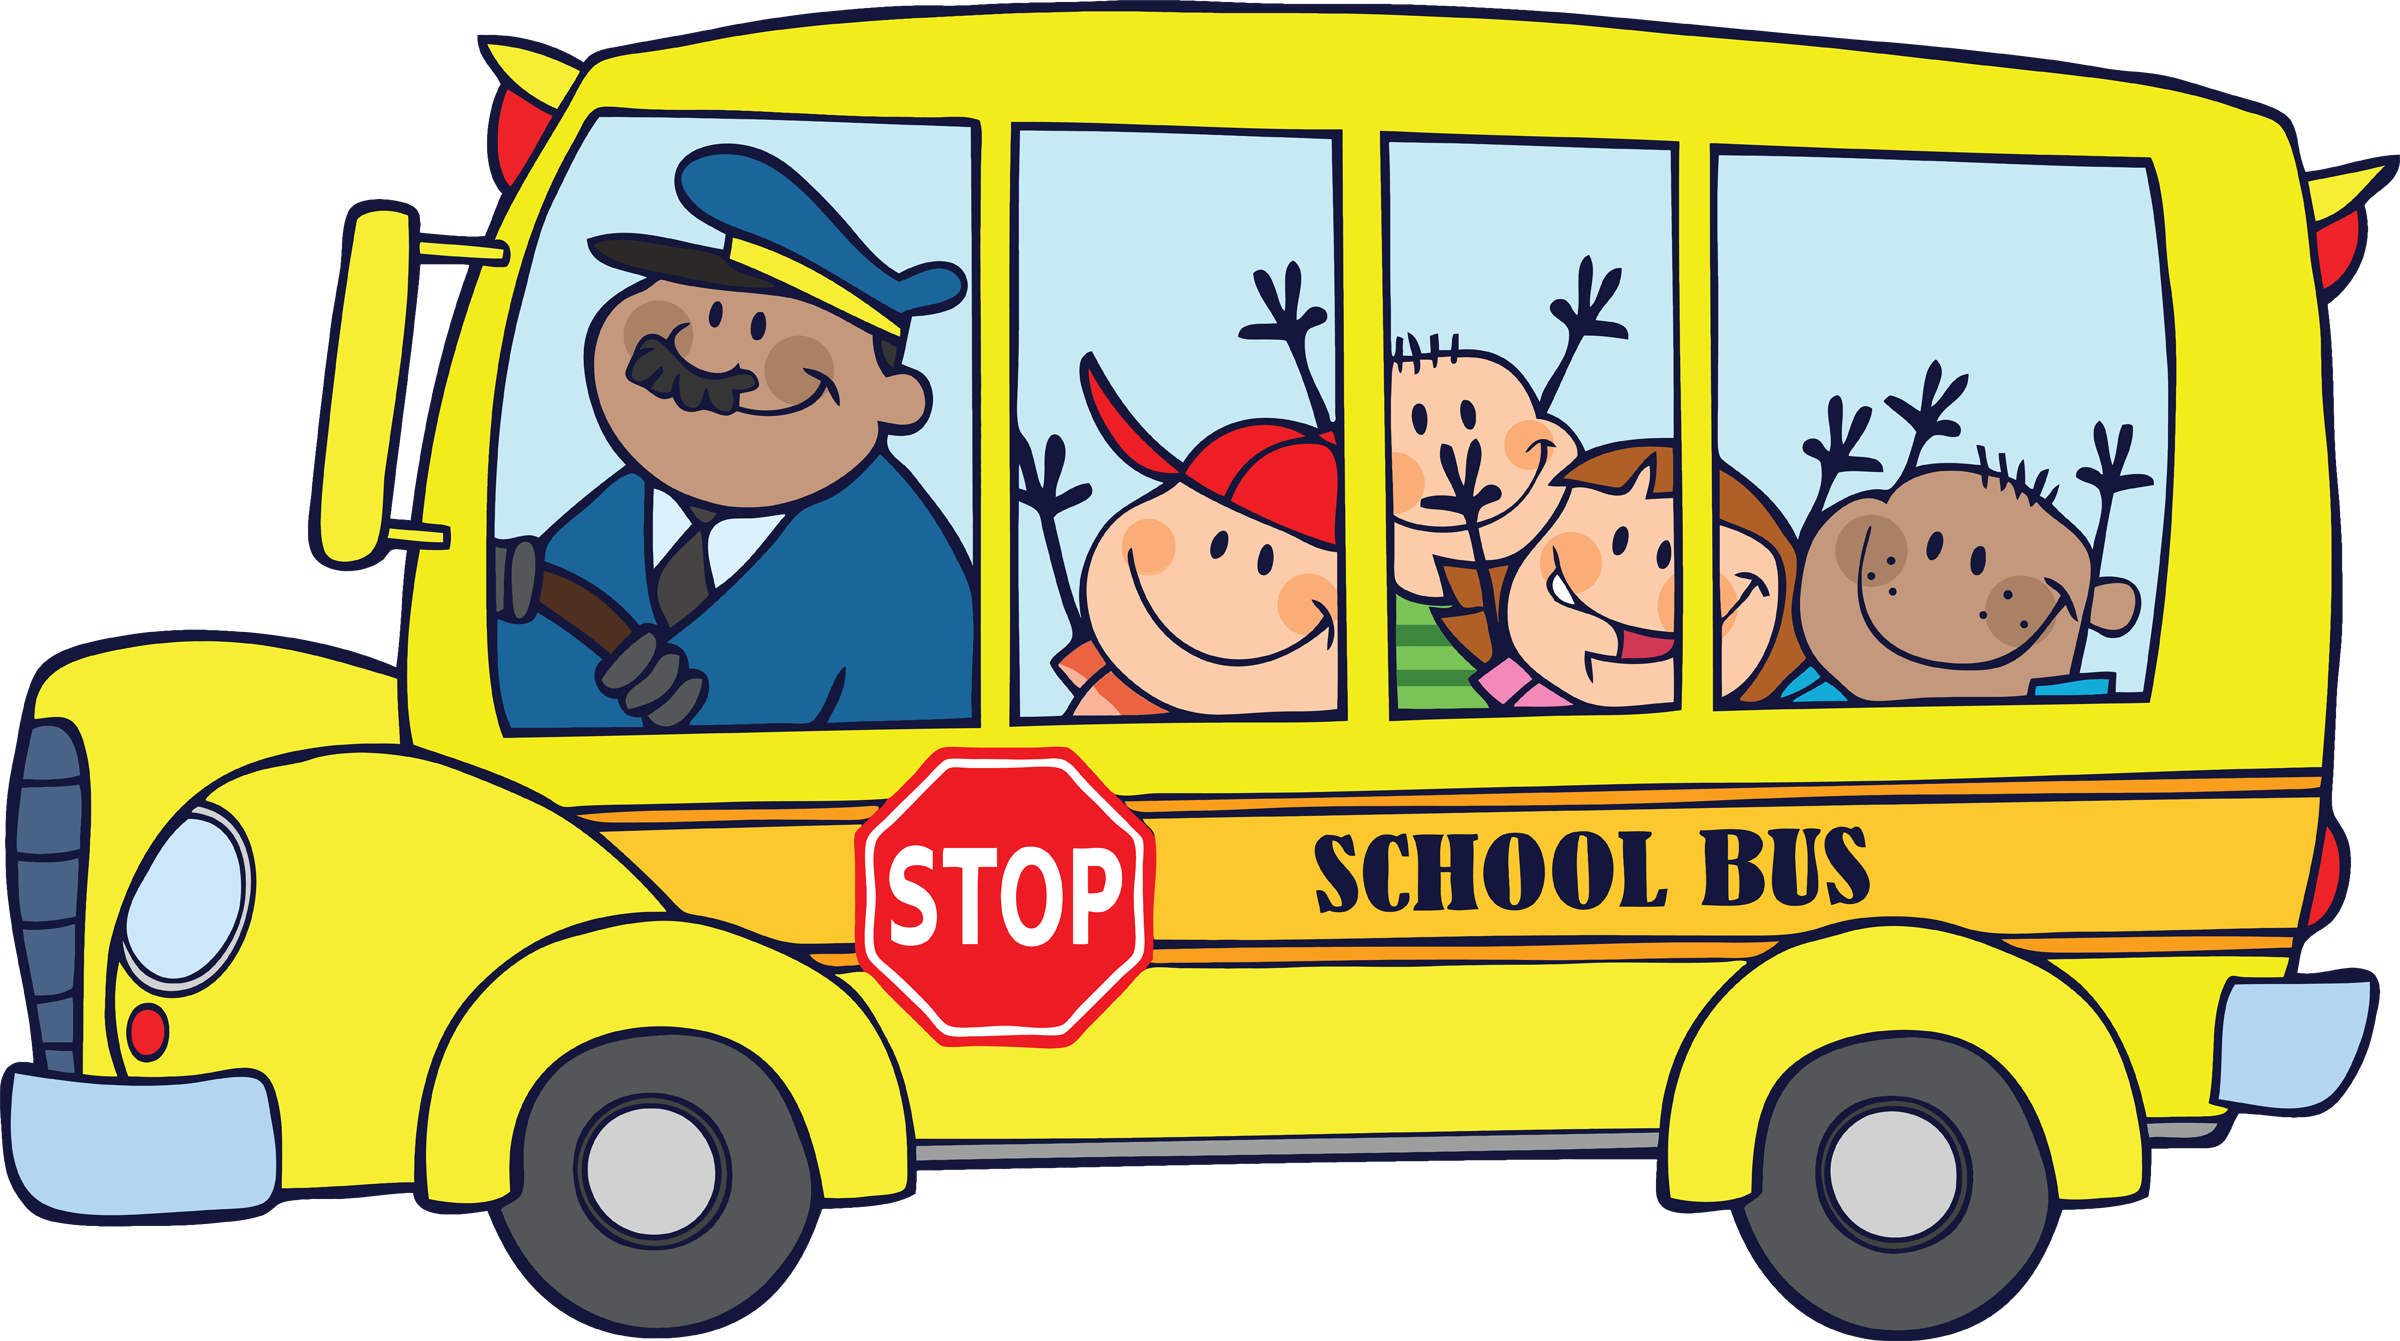 School Bus Clip Art For Kids   Clipart Panda   Free Clipart Images